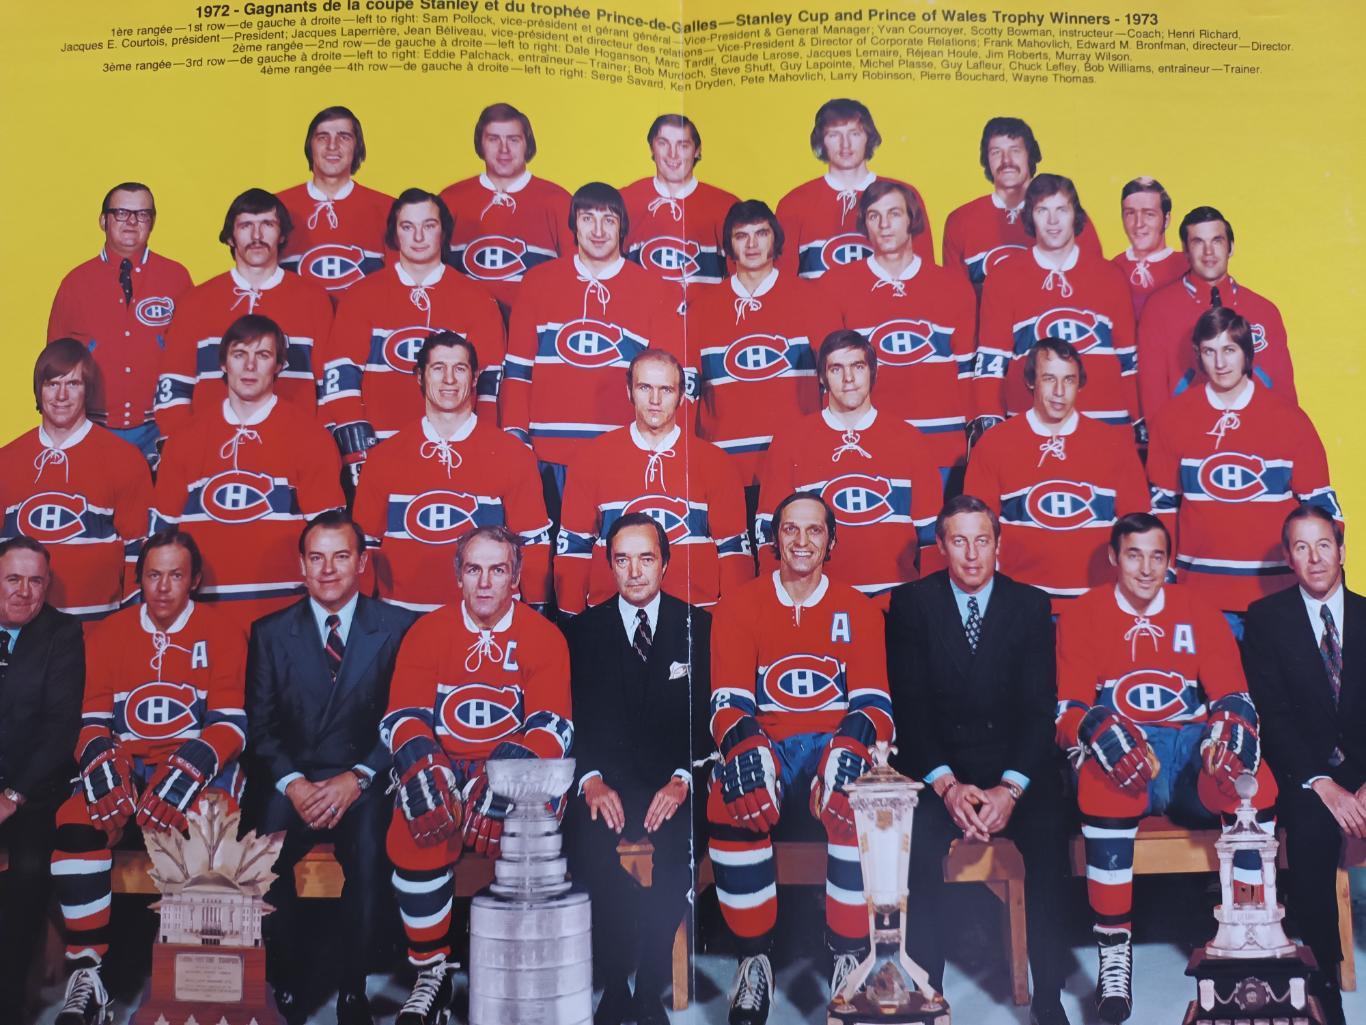 ХОККЕЙ АЛЬБОМ ЕЖЕГОДНИК НХЛ КАНАДИЕНС 1974 NHL YEARBOOK ALBOM TEAM CANADIENS 3